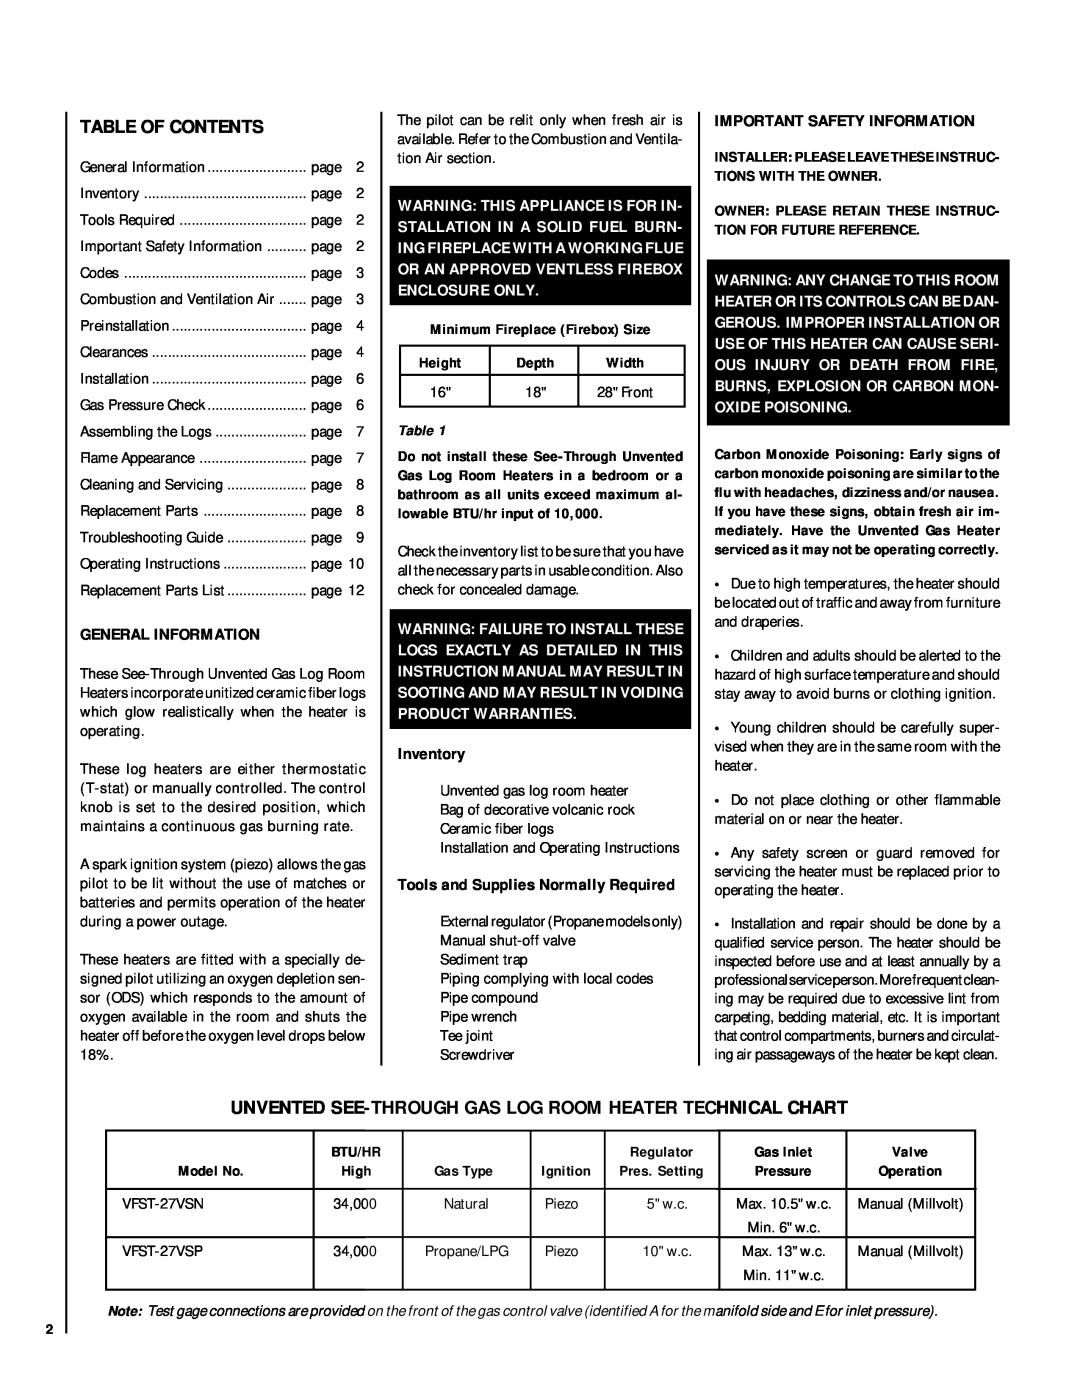 Superior VFST-27VSN-2, VFST-27VSP-2 Table Of Contents, General Information, Inventory, Important Safety Information 